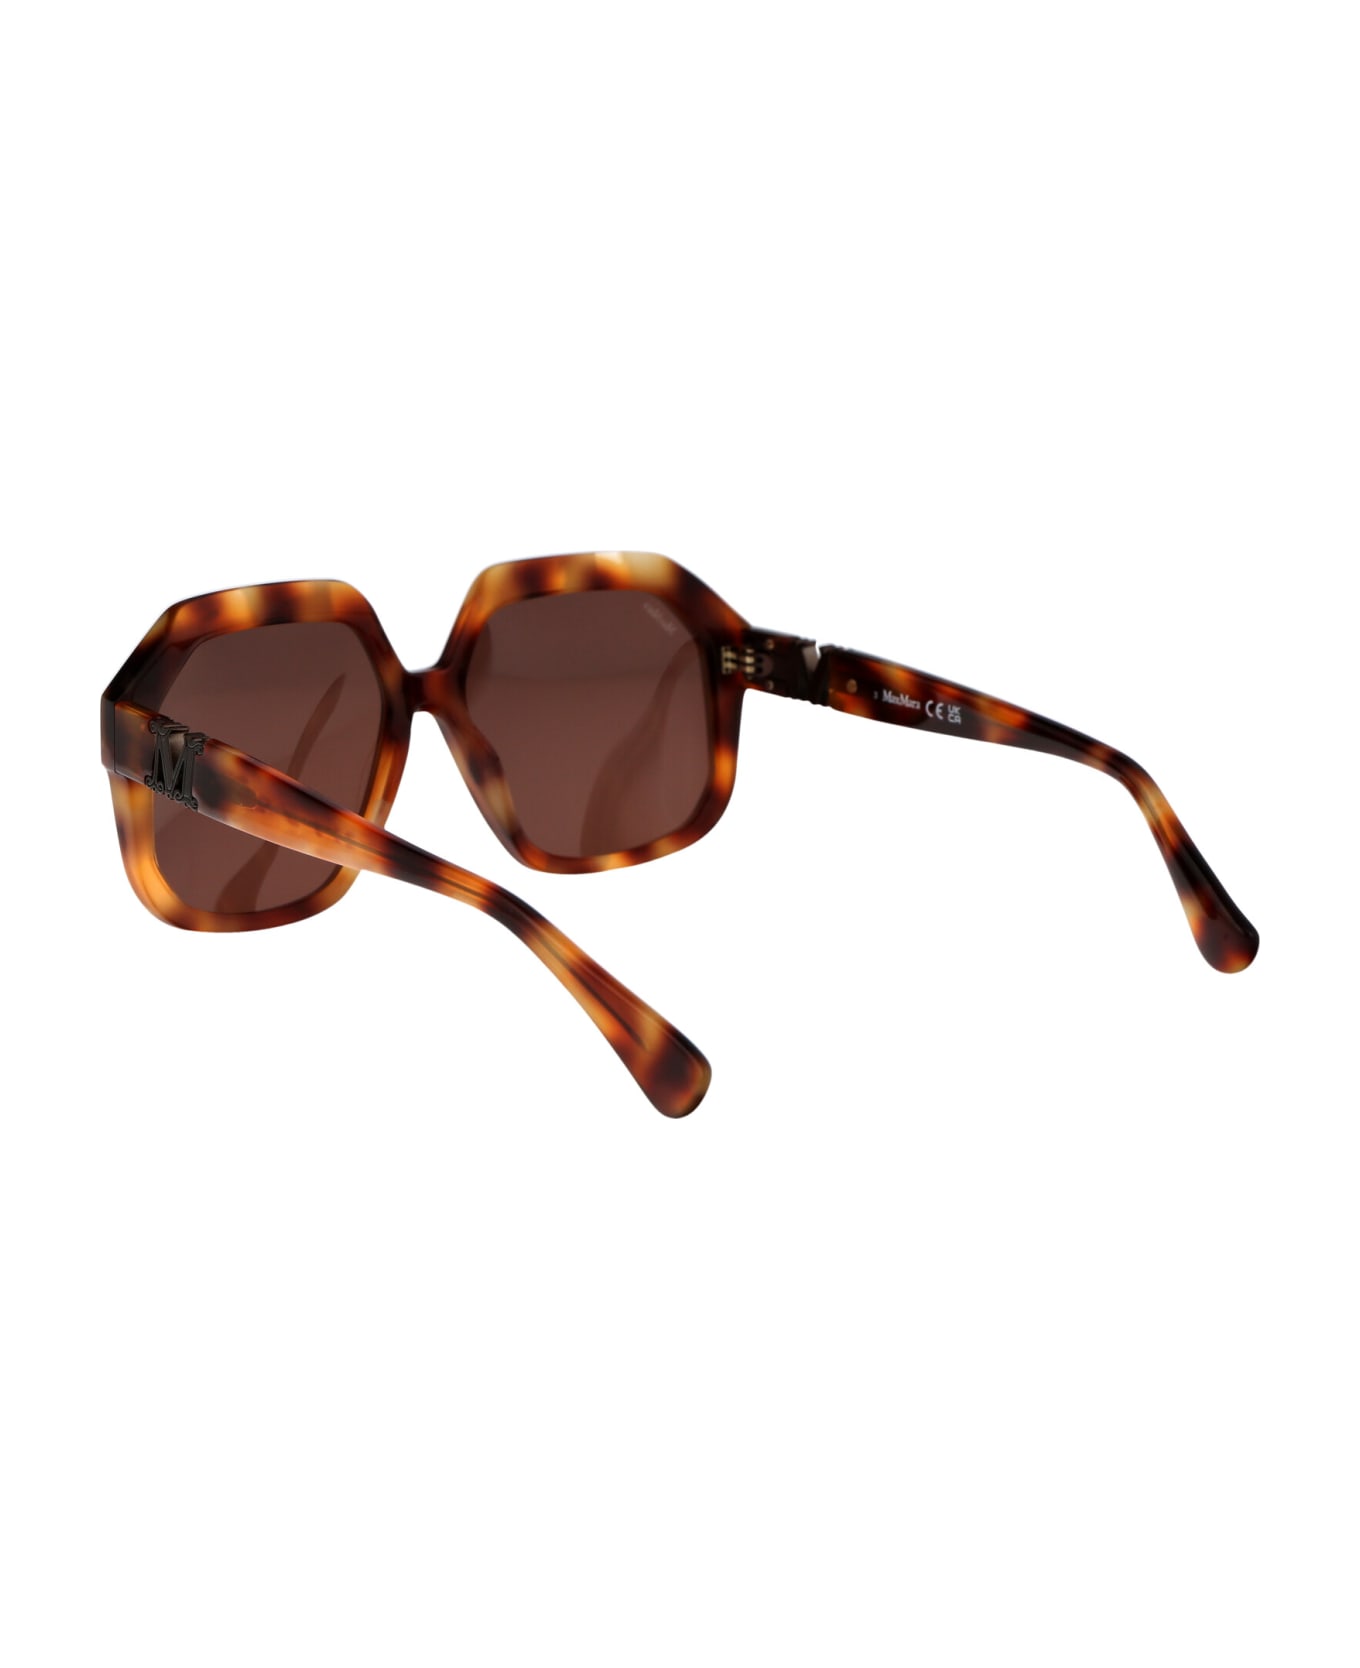 Max Mara Emme12 Sunglasses - 53E Avana Bionda/Marrone サングラス